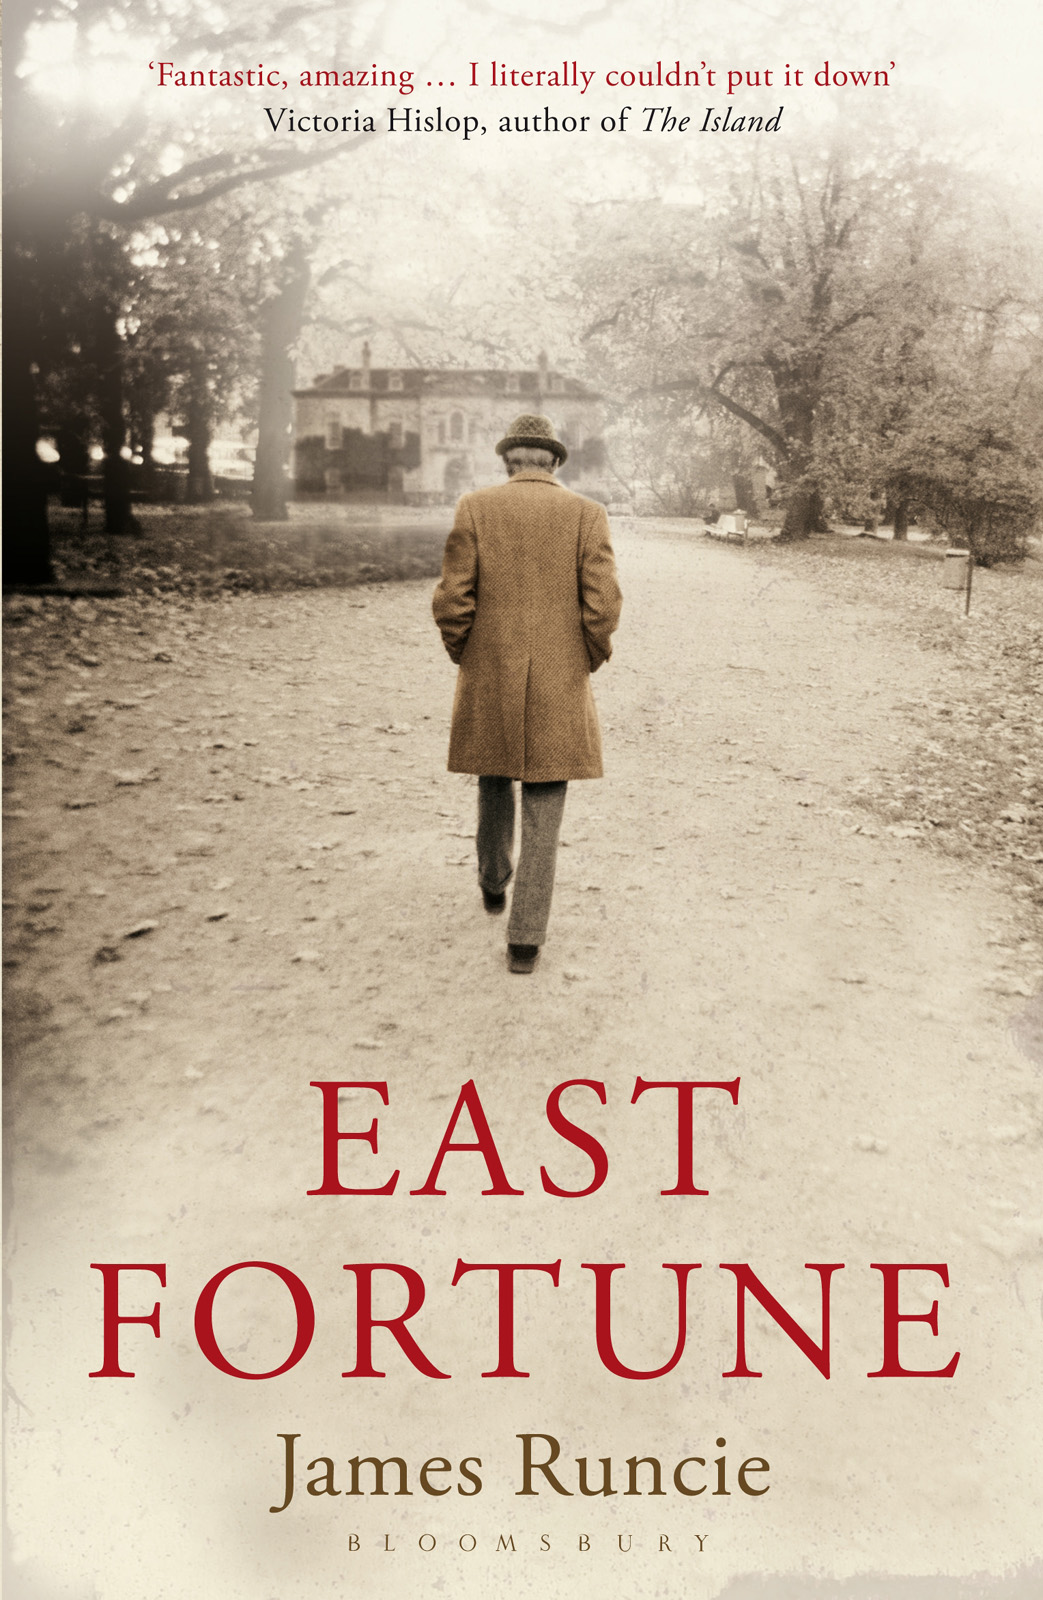 East Fortune (2009) by James Runcie